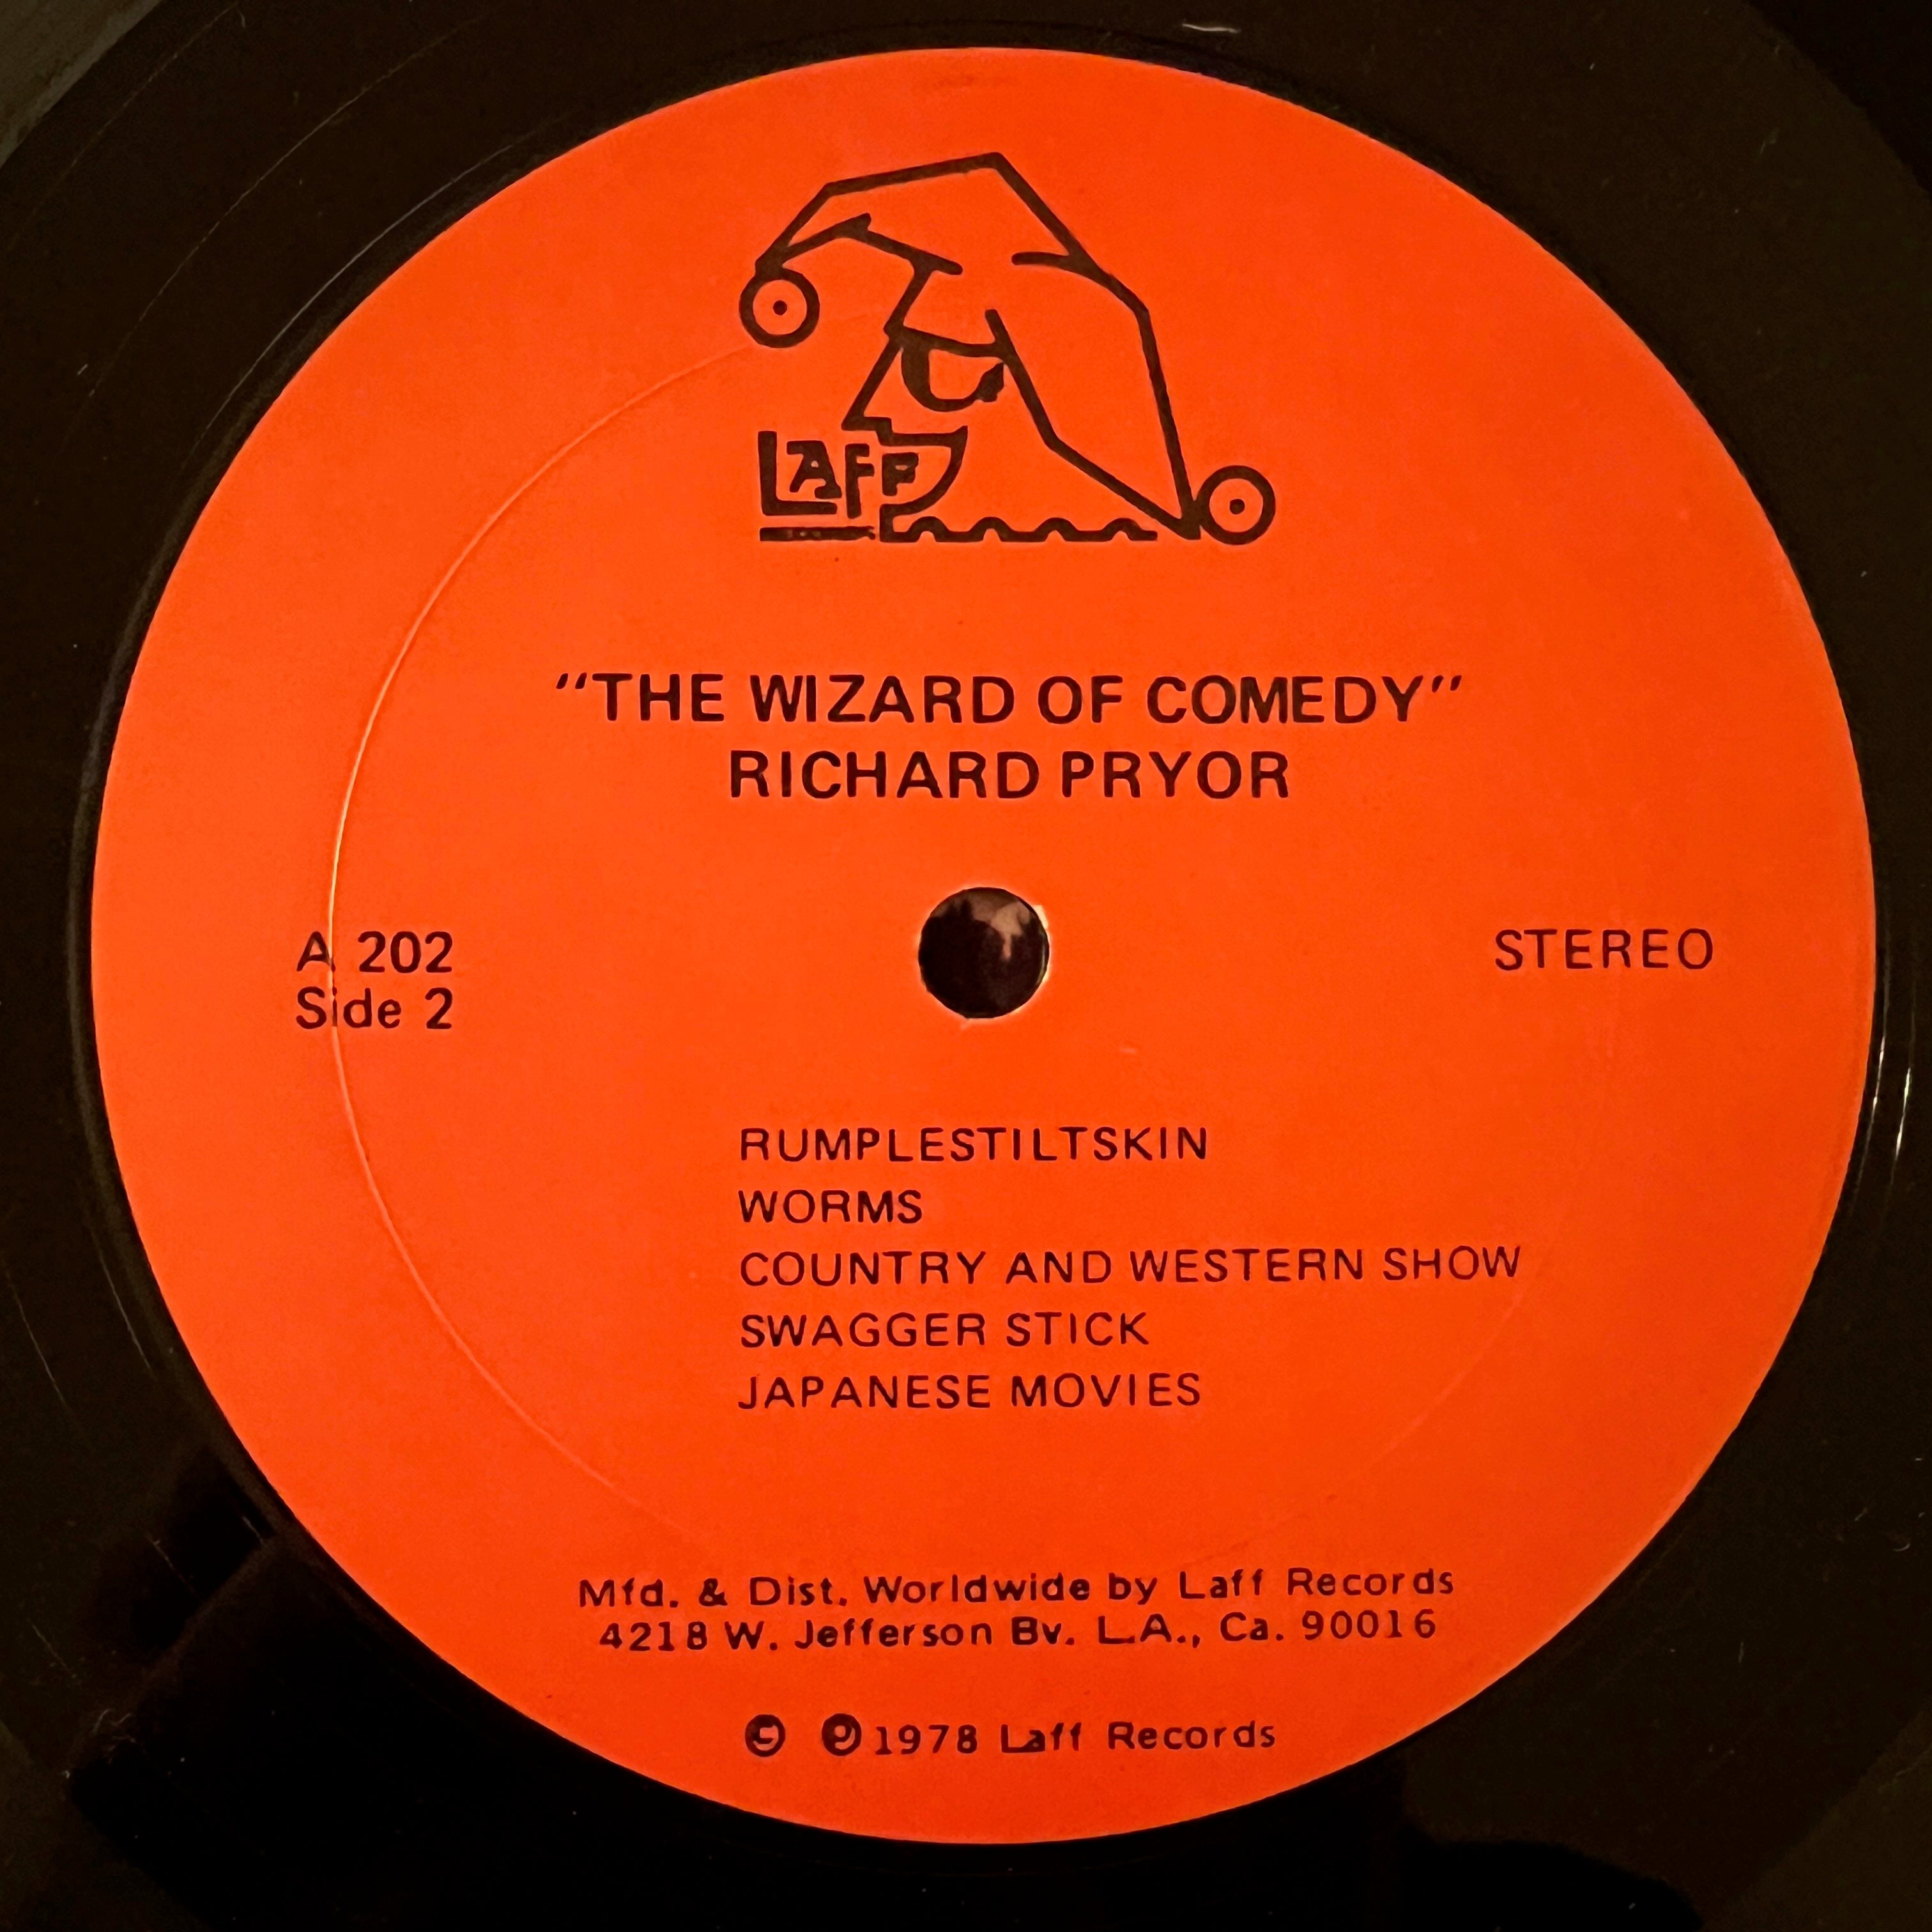 Richard Pryor - The Wizard of Comedy (Vinyl LP) (Laff, 1978 A-202) VG+